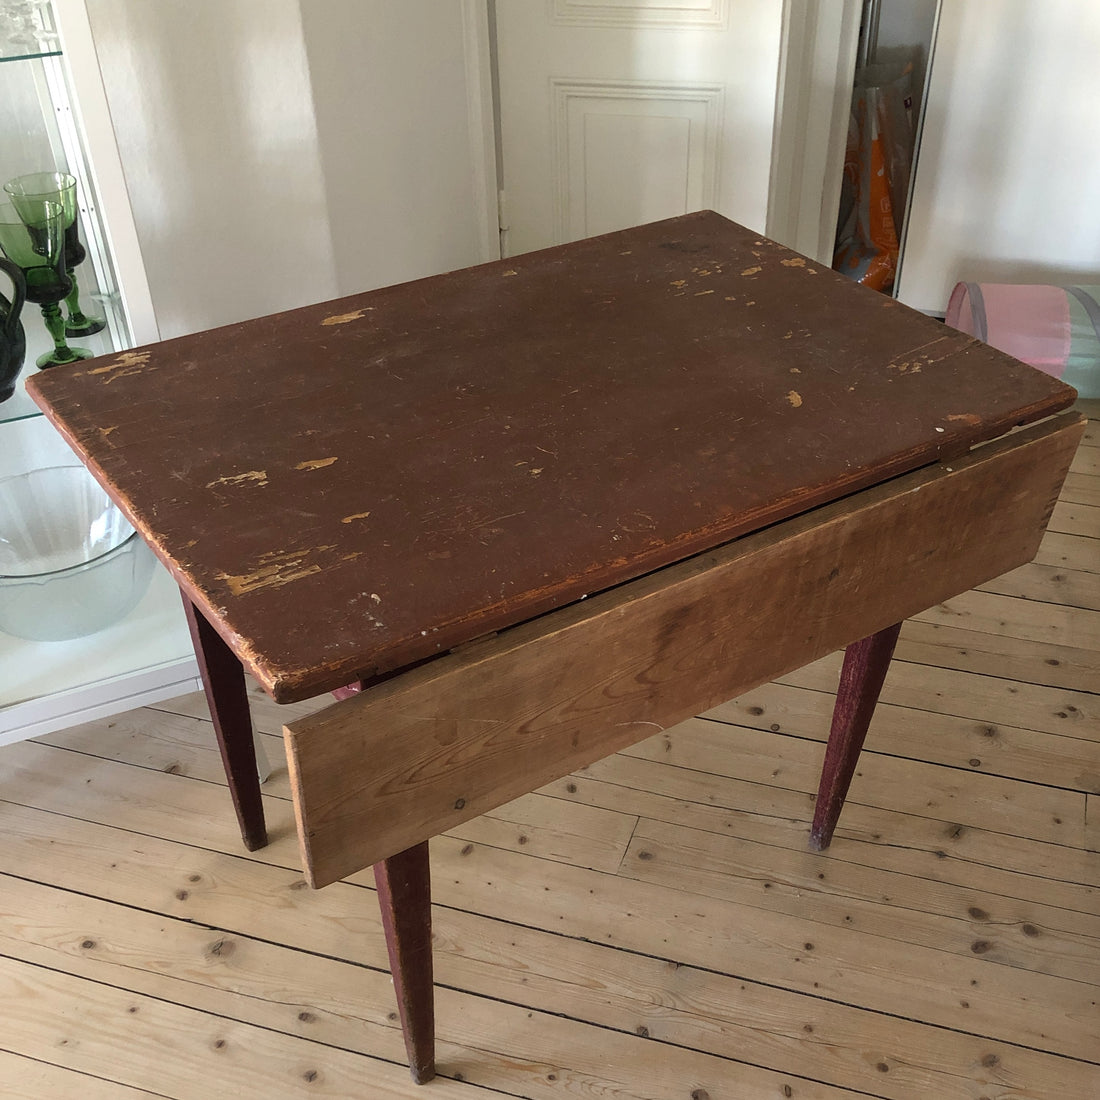 Sommarens renoveringsprojekt - ett loppisfyndat bord